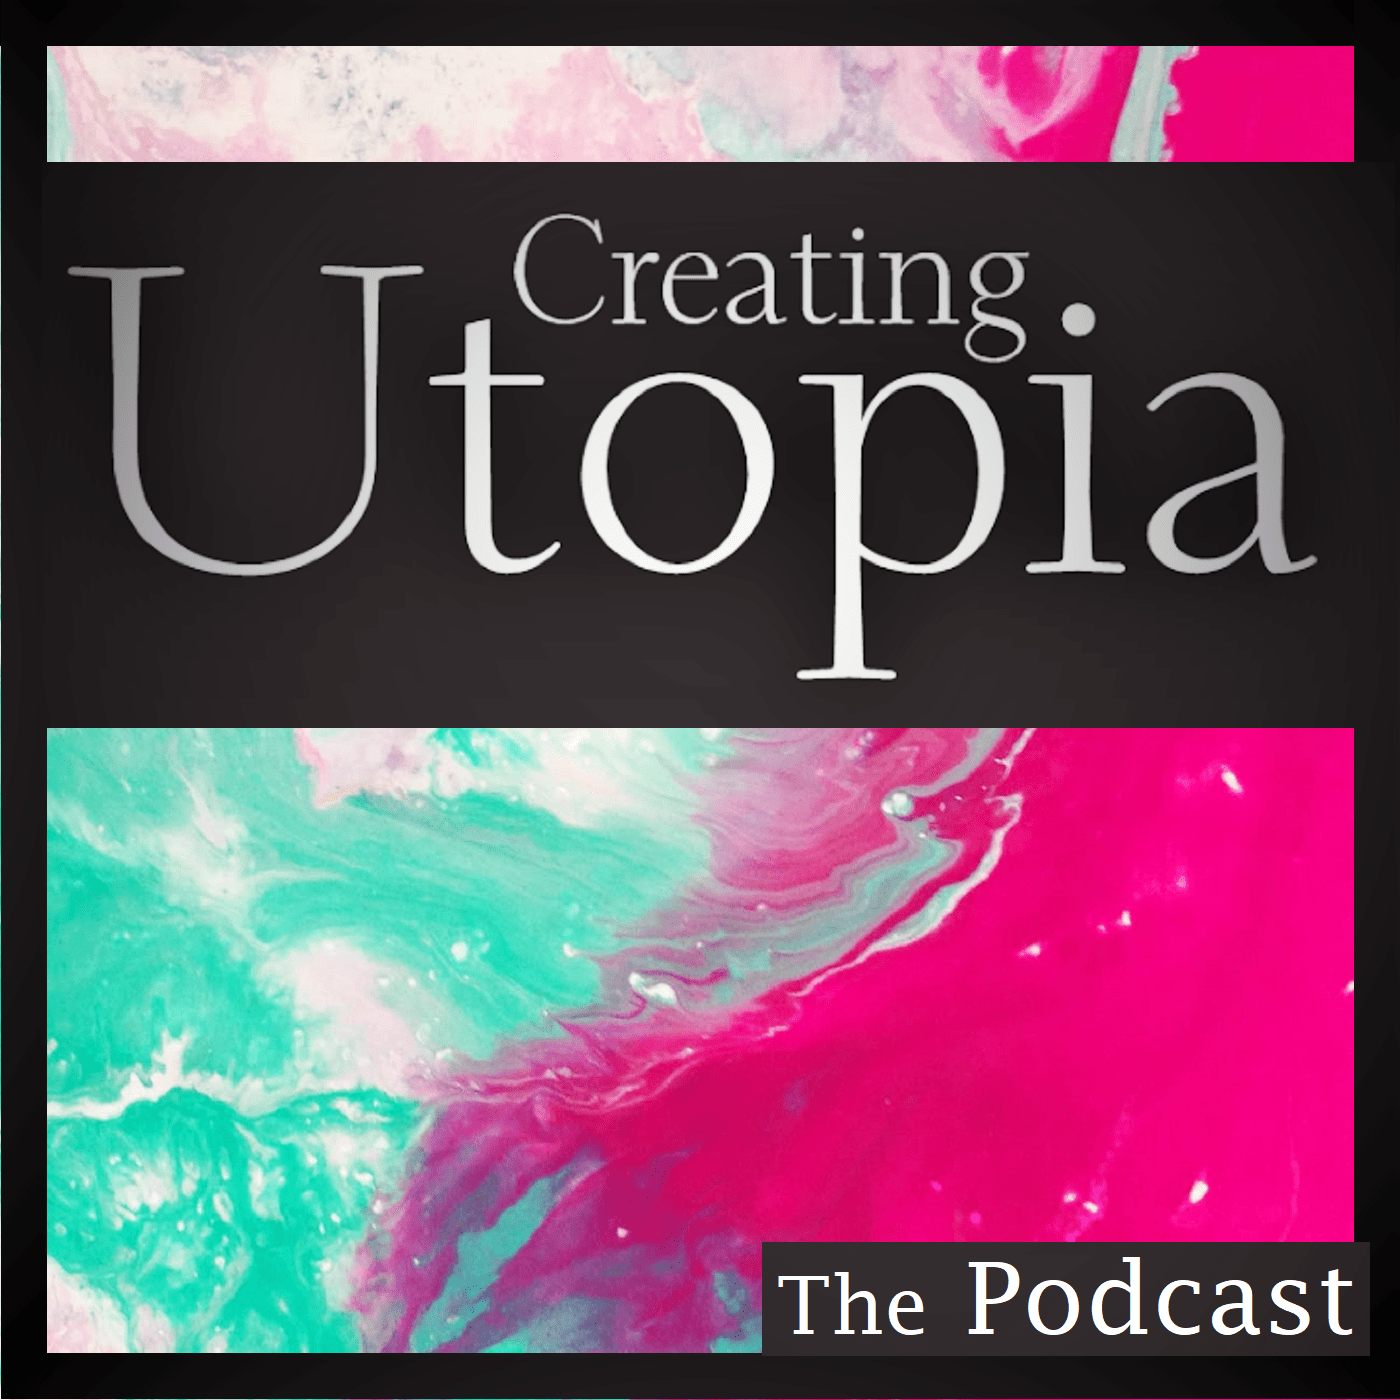 Creating Utopia The Podcast